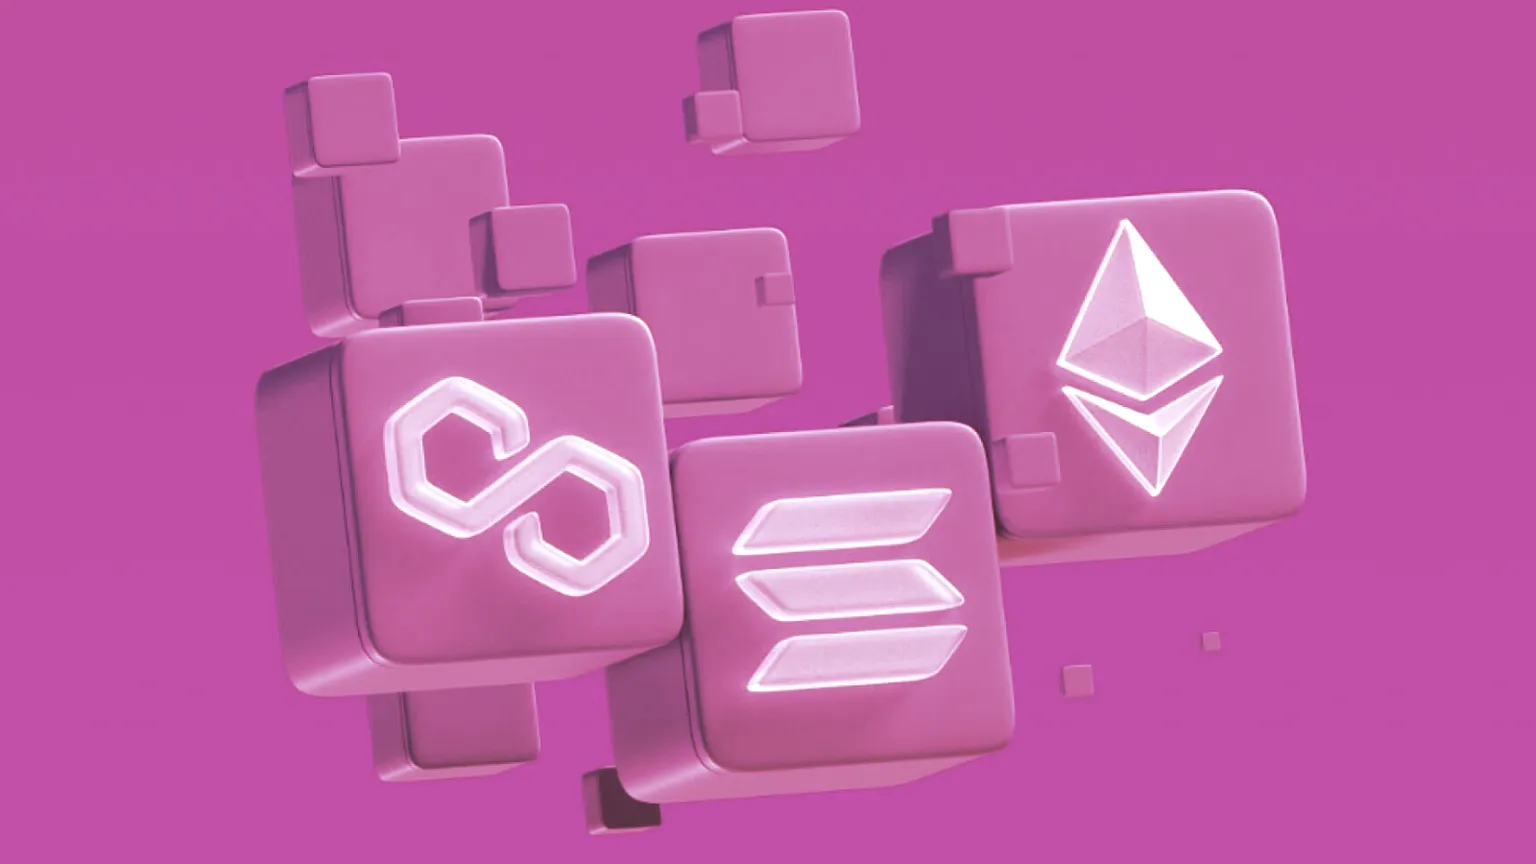 Image: Solana, Polygon, and Ethereum logos